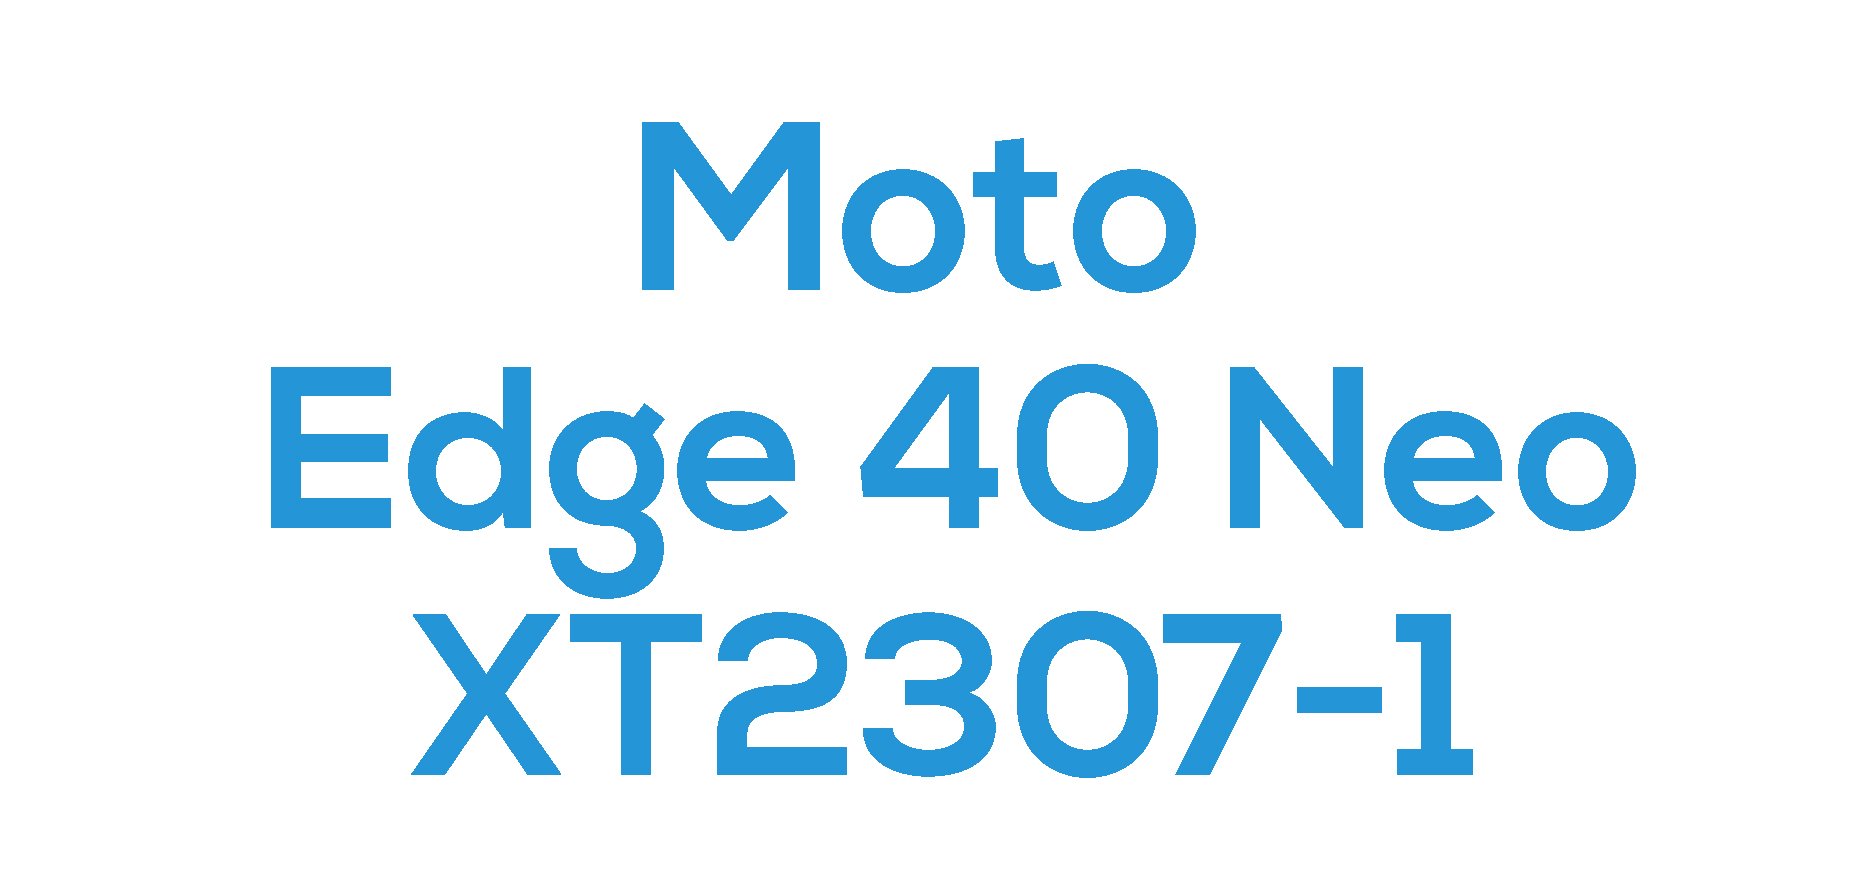 Edge 40 Neo (XT2307-1)